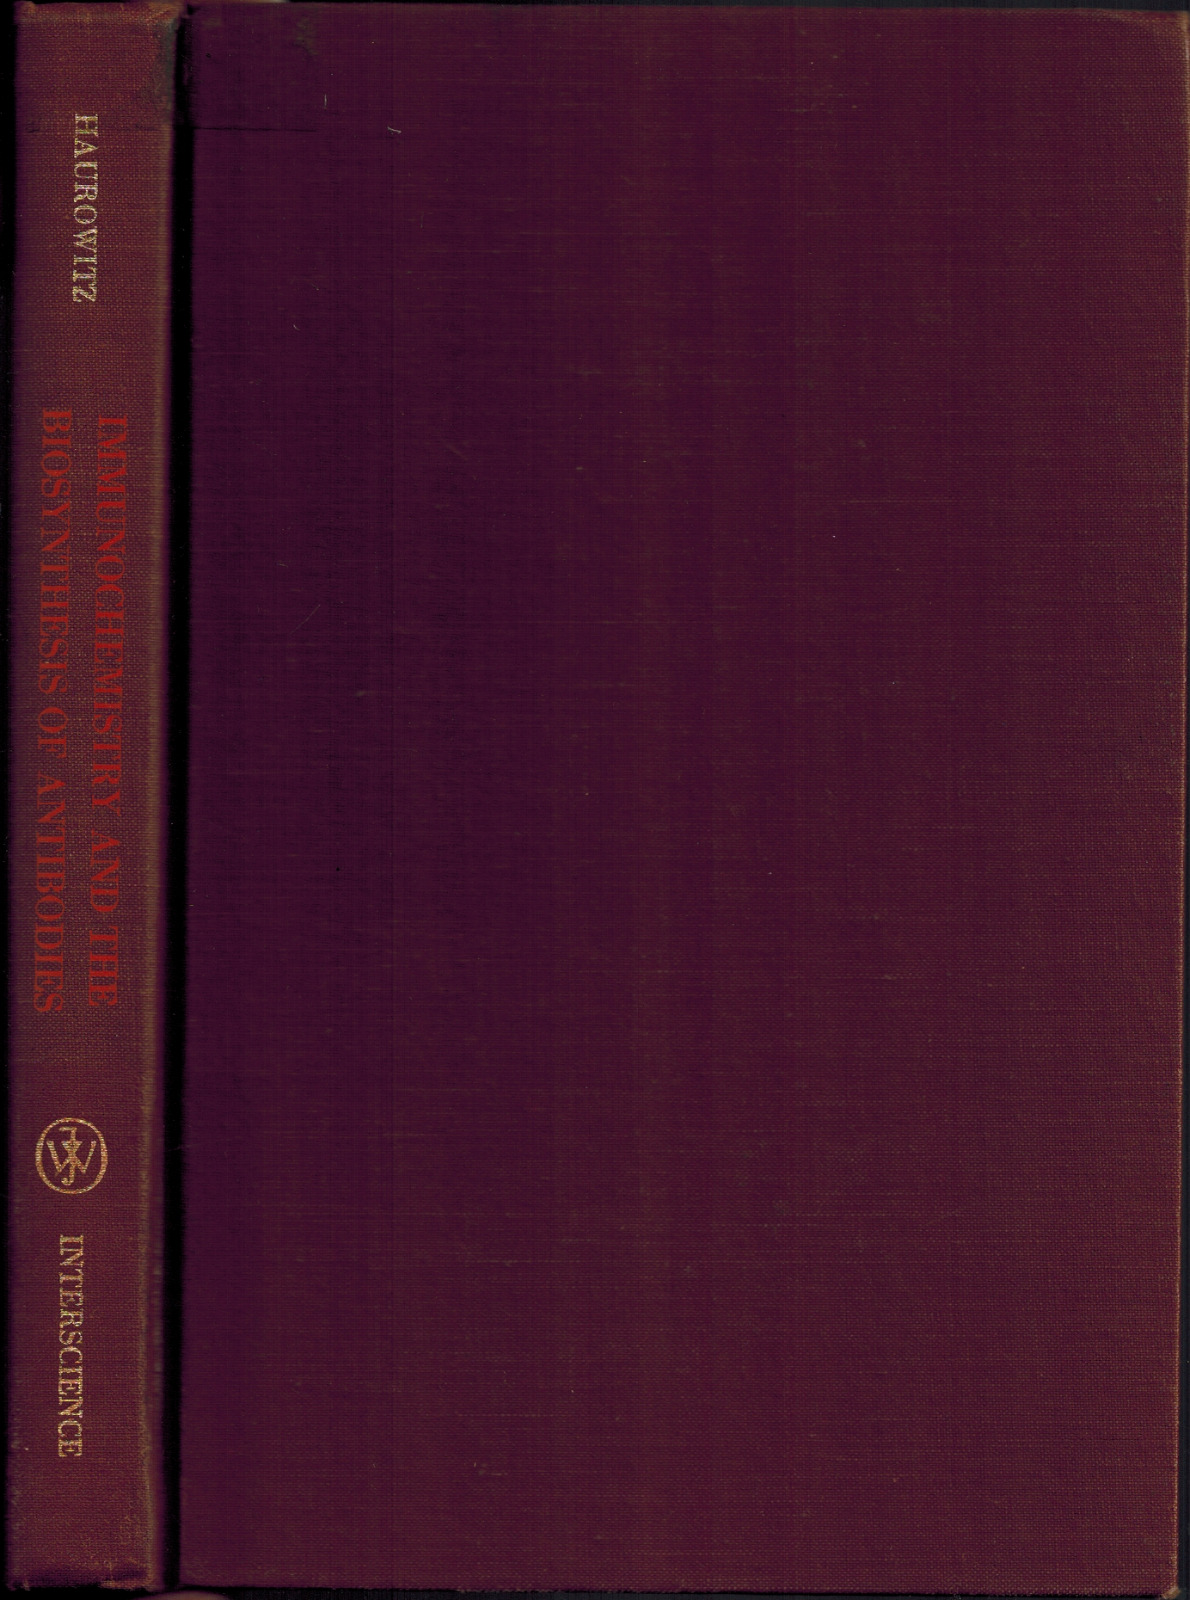 1968 Immunochemistry & Biosynthesis of Antibodies, Immunity Immunology Disease